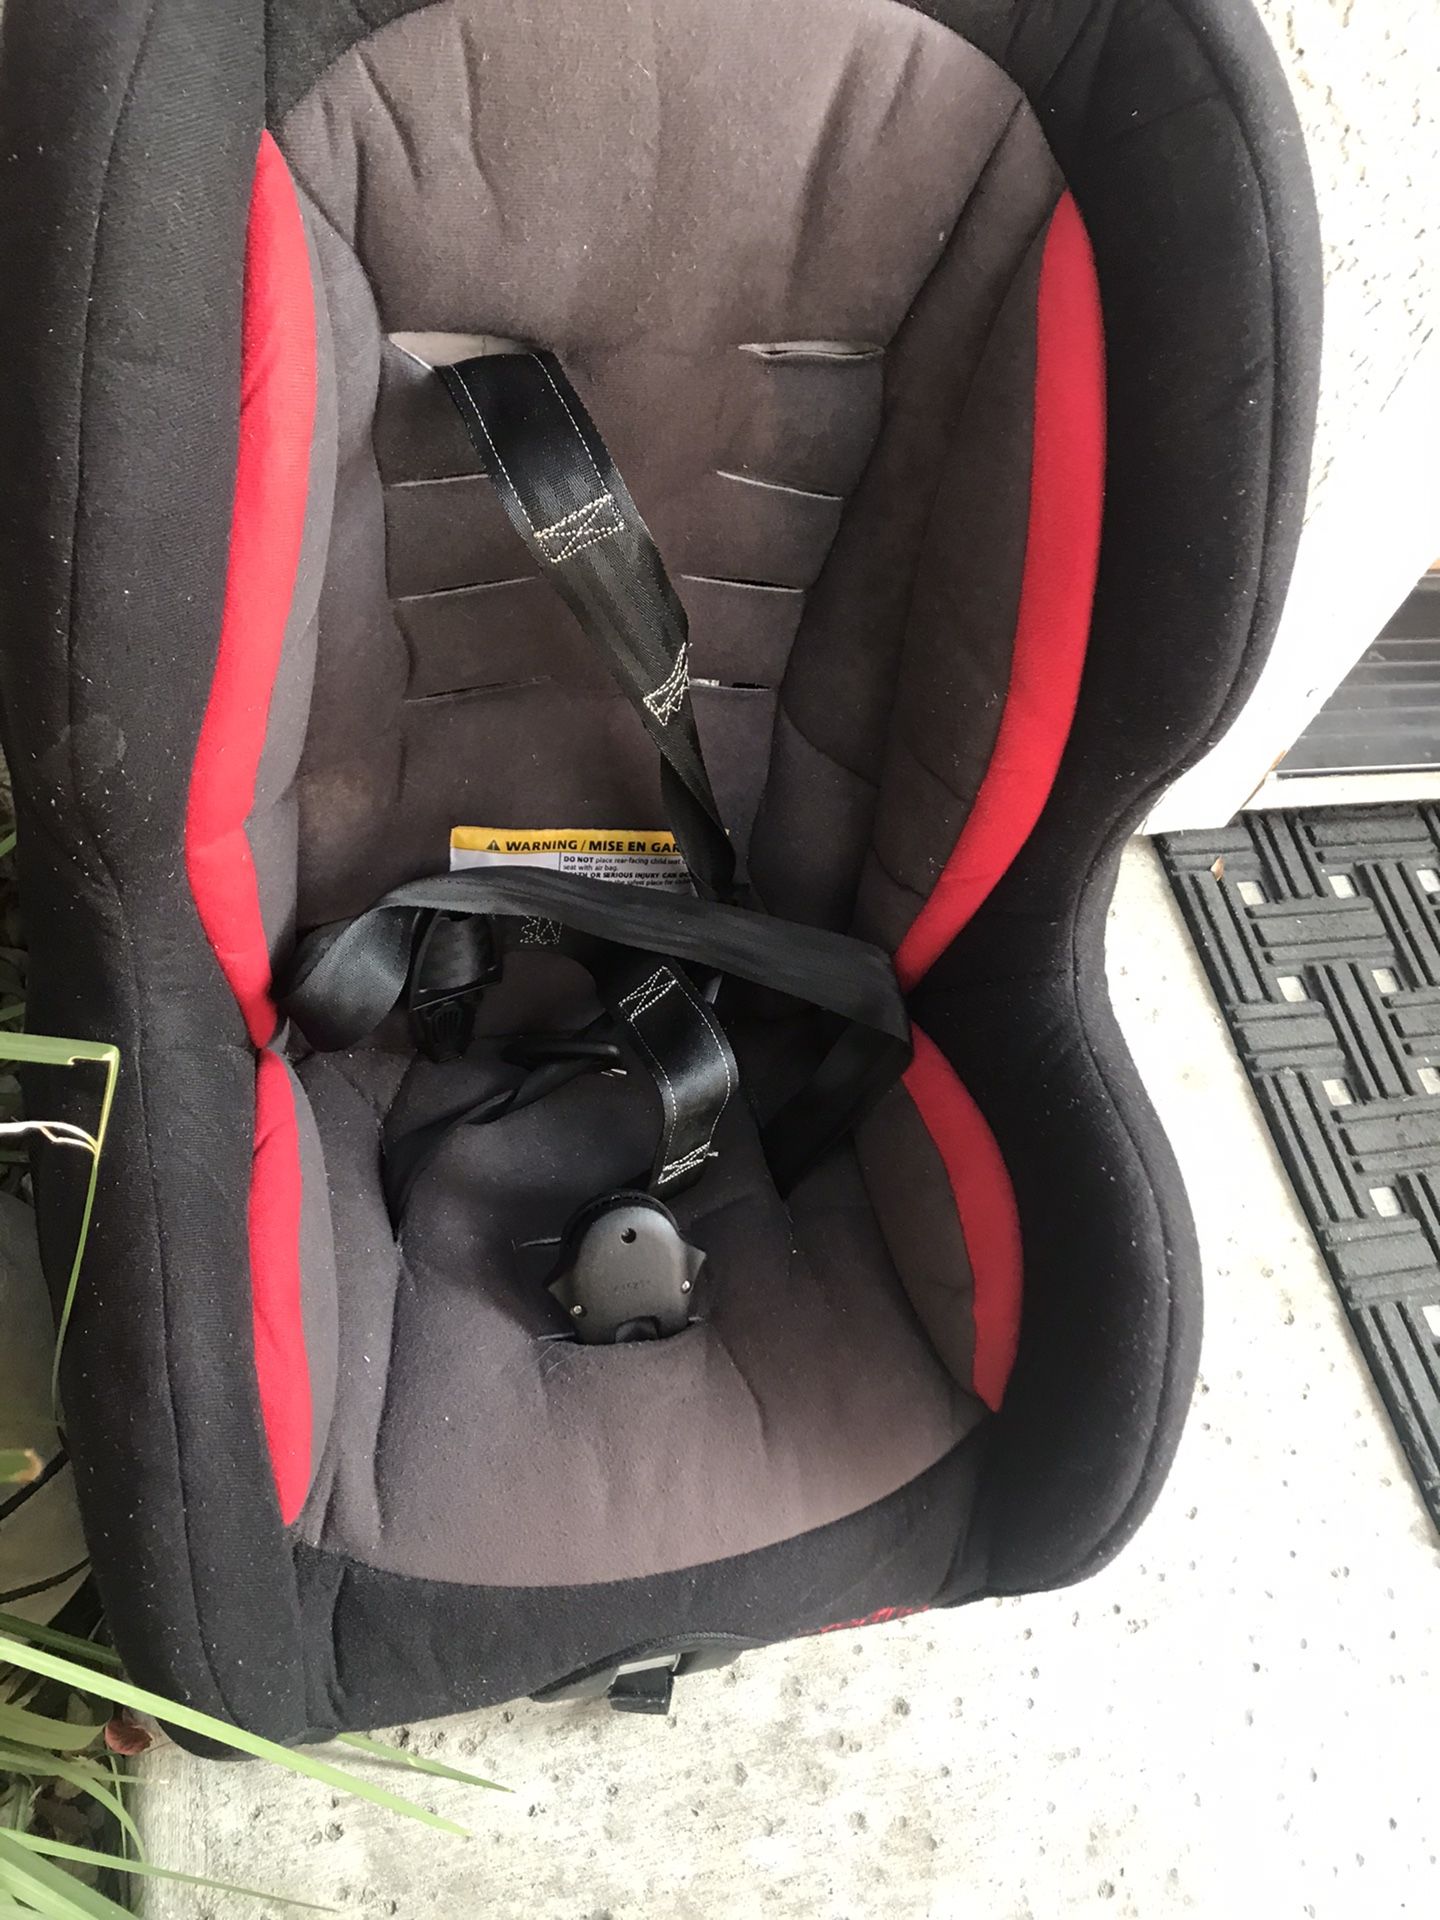 Kids car seat complete